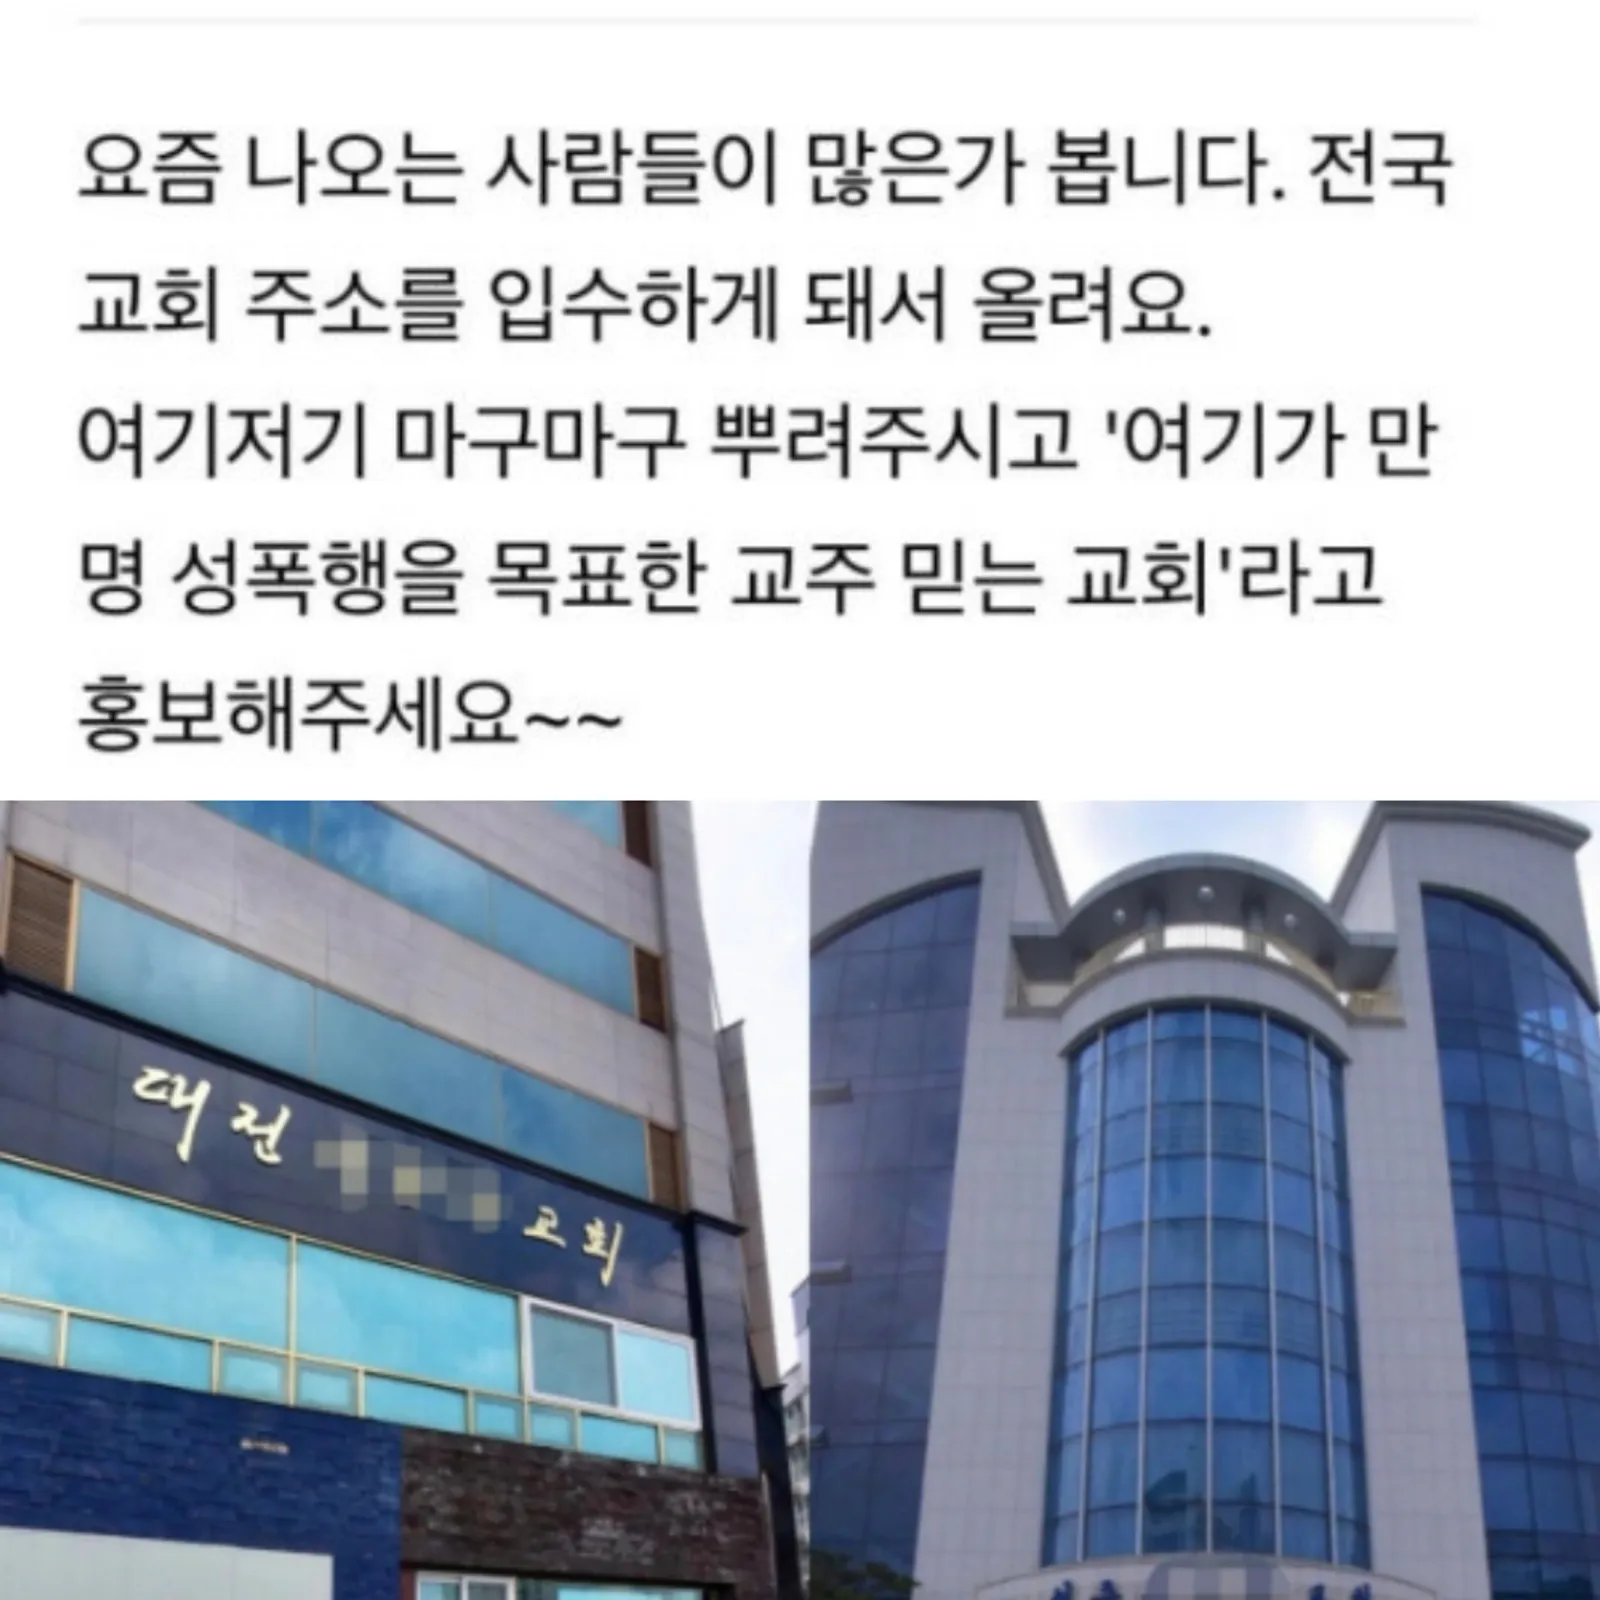 Mengkhawatirkan, Keluarga Kyoungyoon 'DKZ' Menjadi Jemaat Gereja JMS